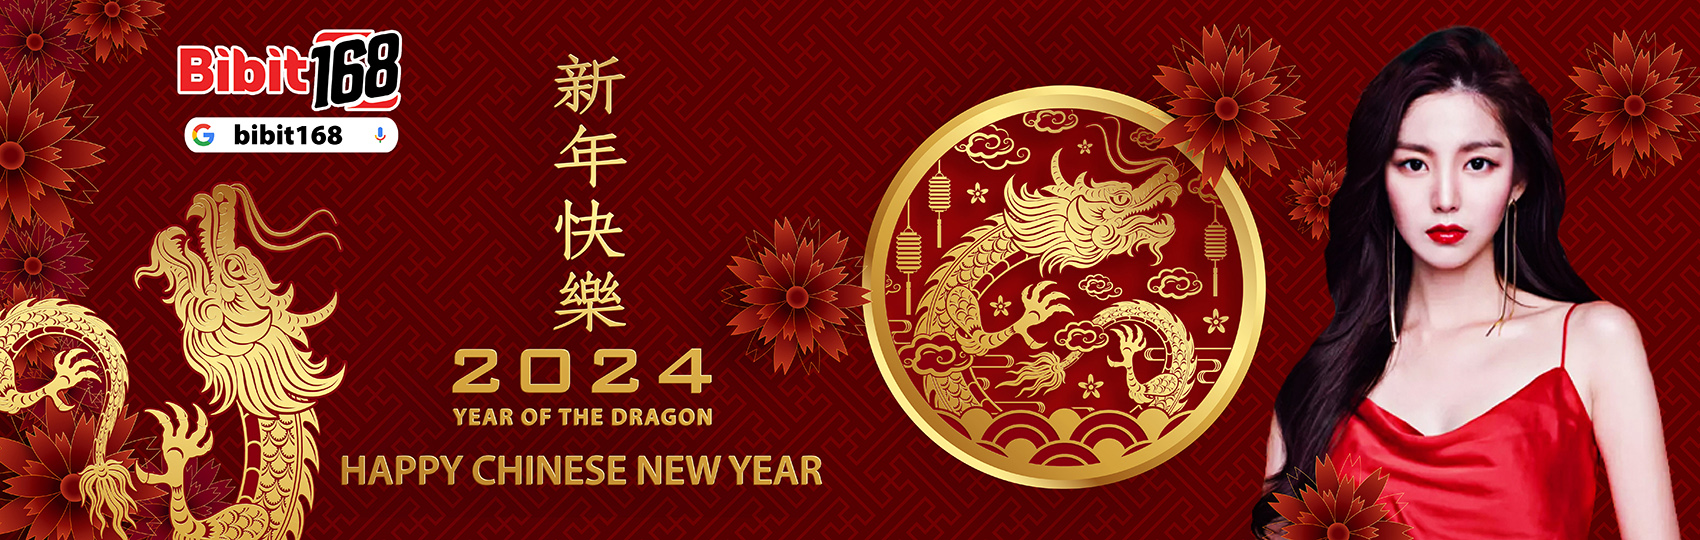 HAPPY CHINESE NEW YEAR 2024